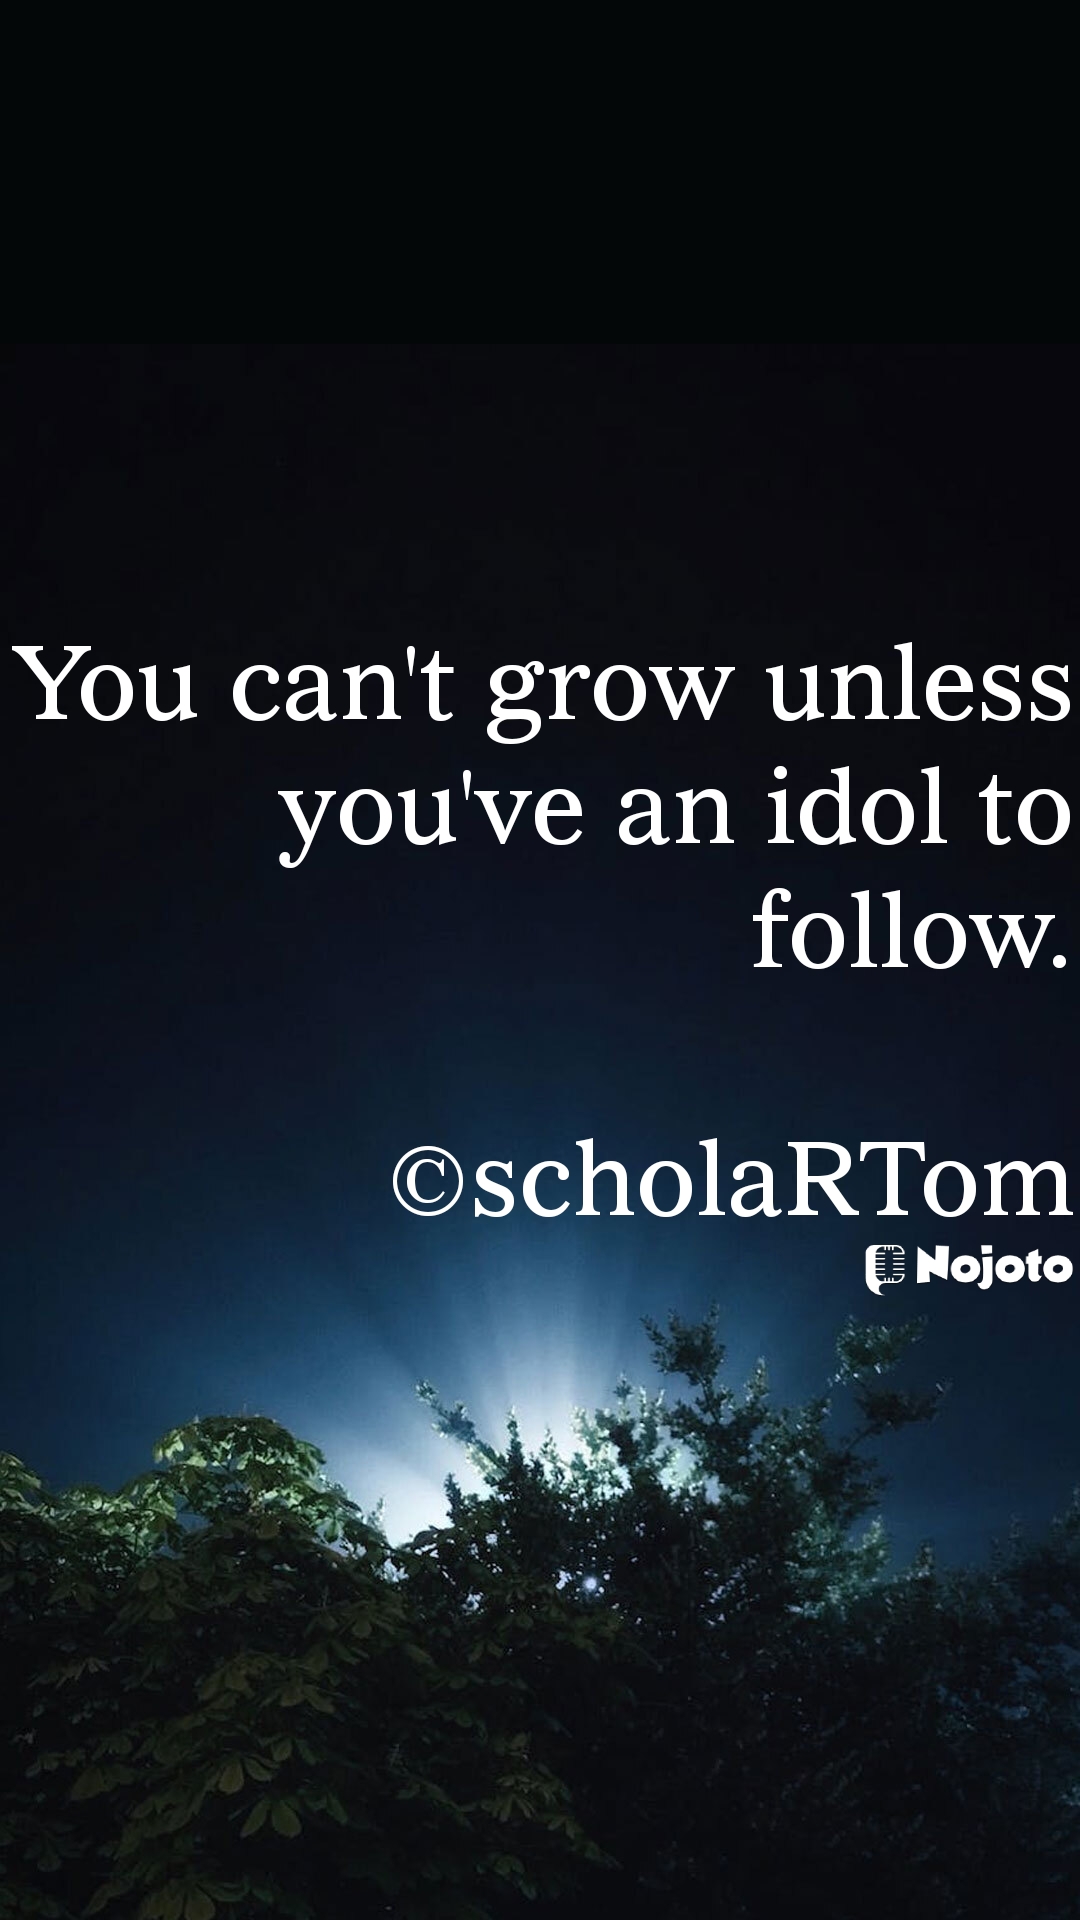 Follow your idol.
#Find_your_idol
#Ray